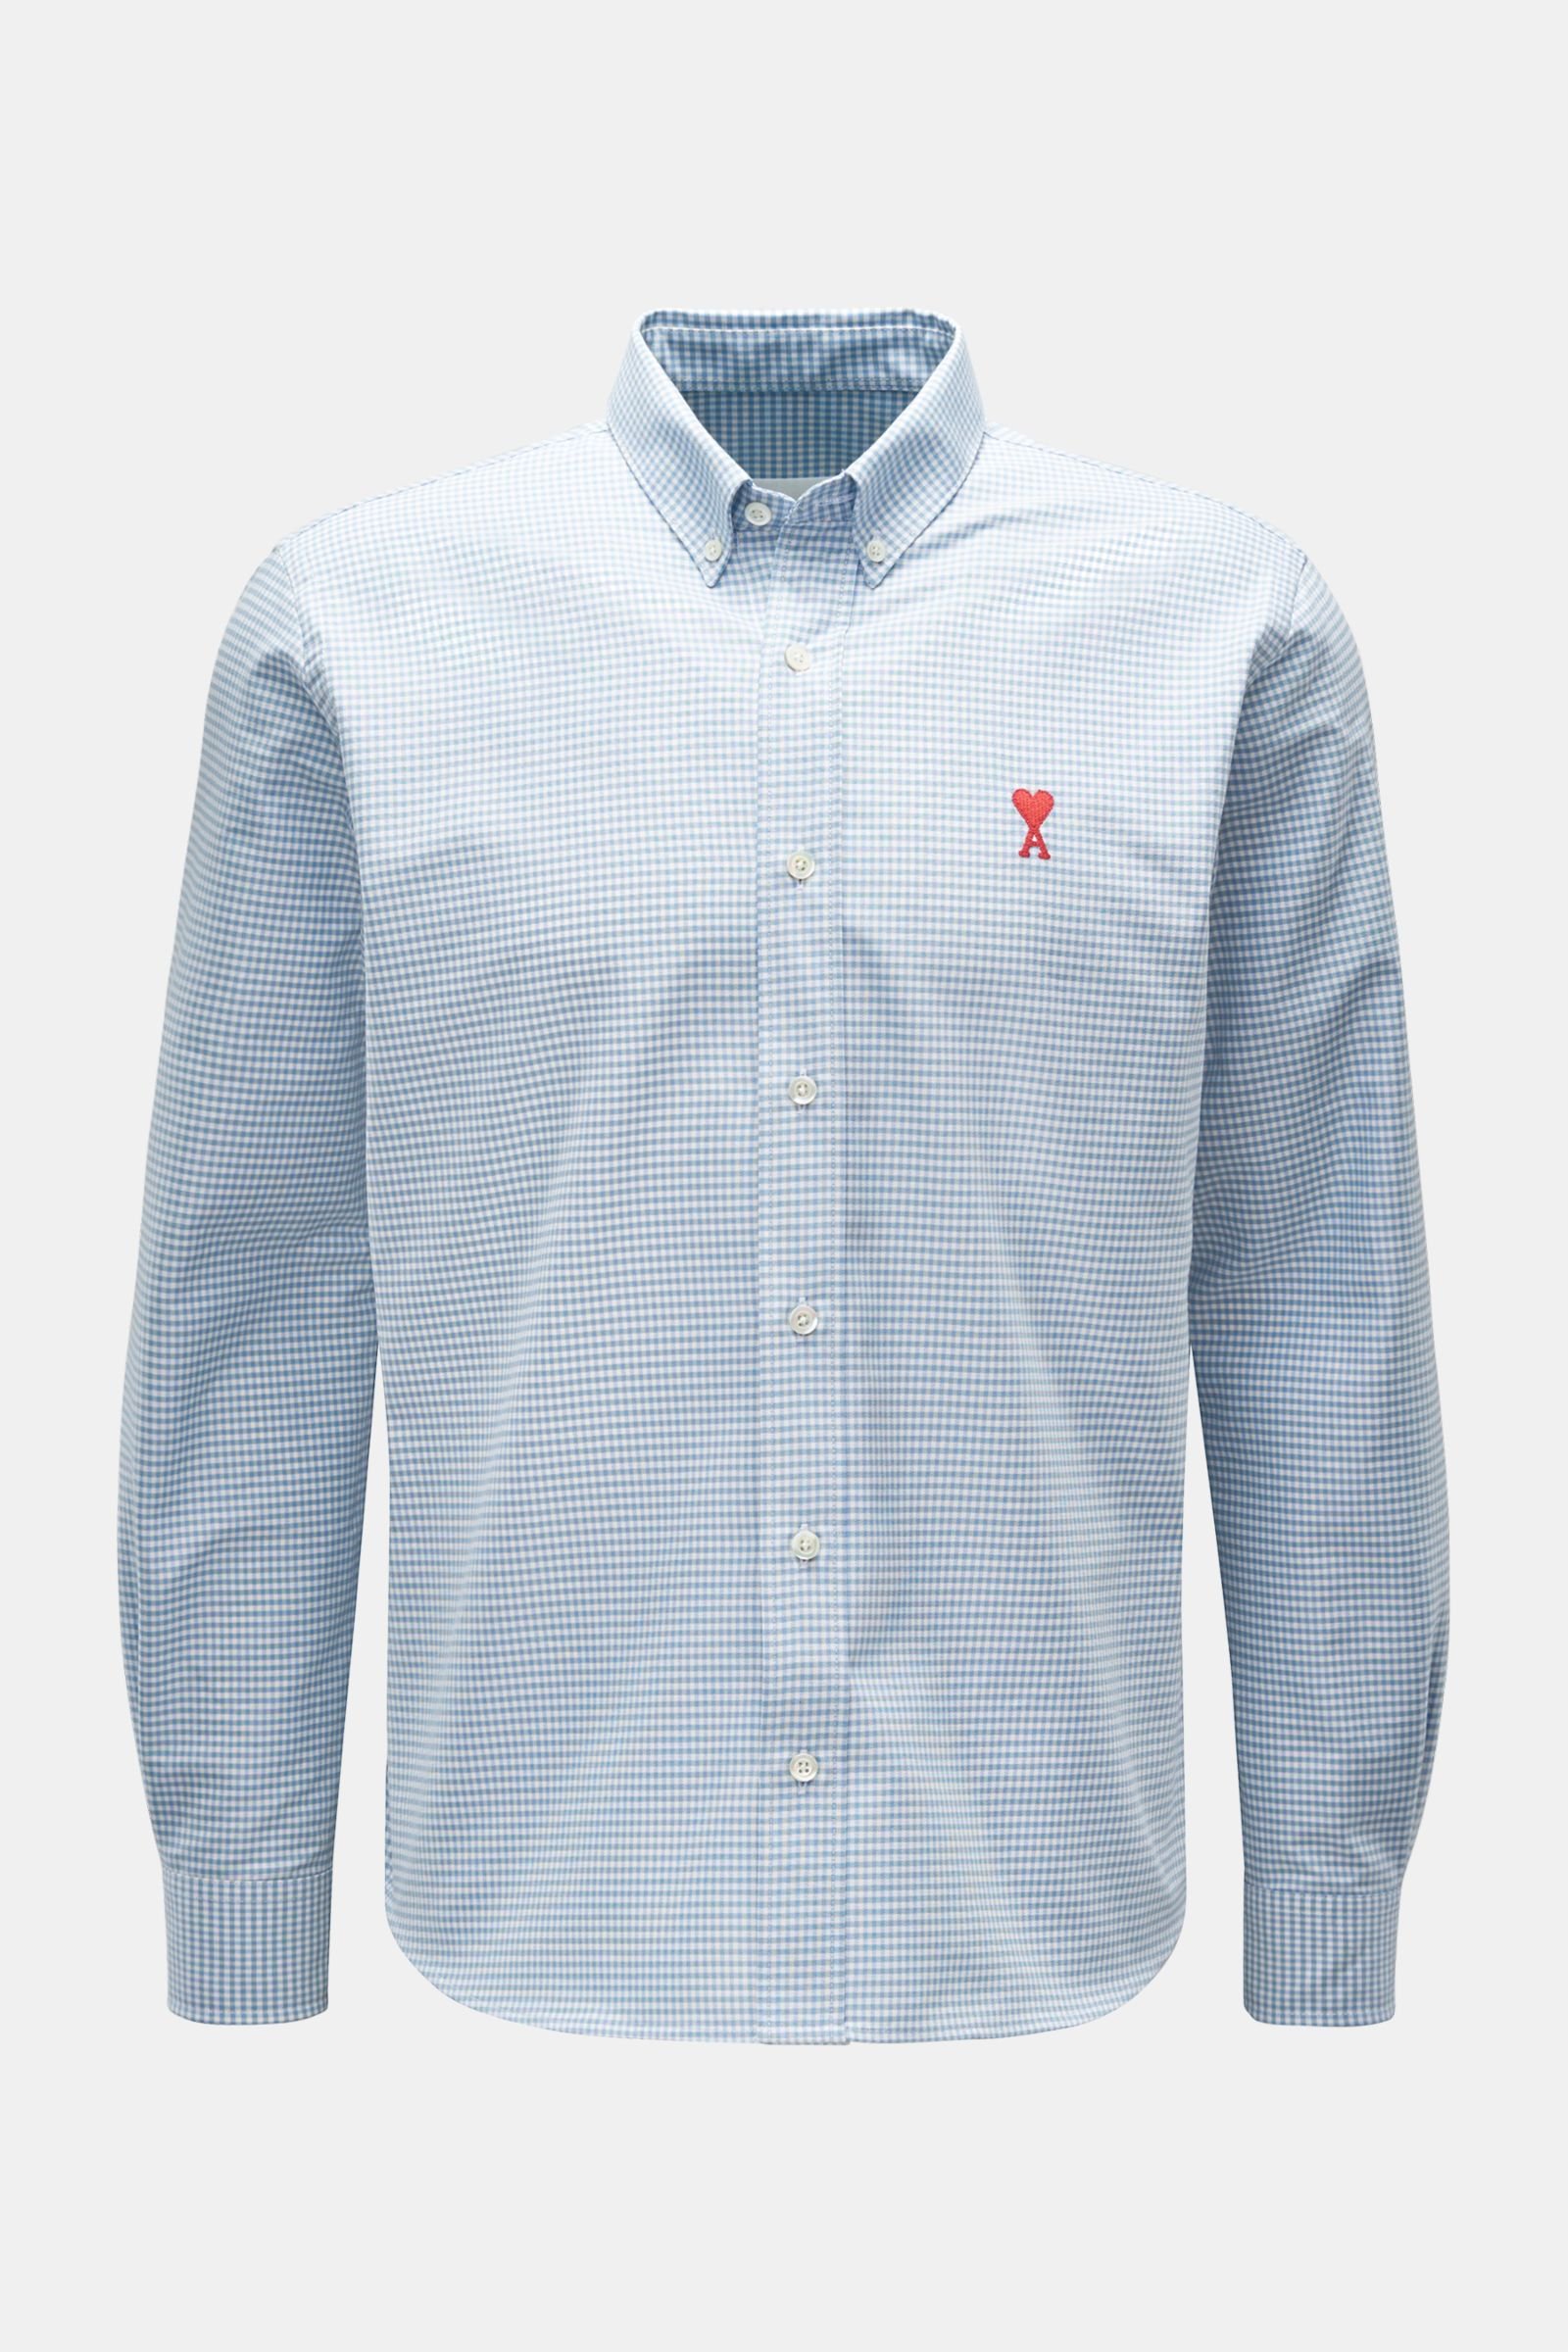 Oxford shirt button-down collar light blue/white checked